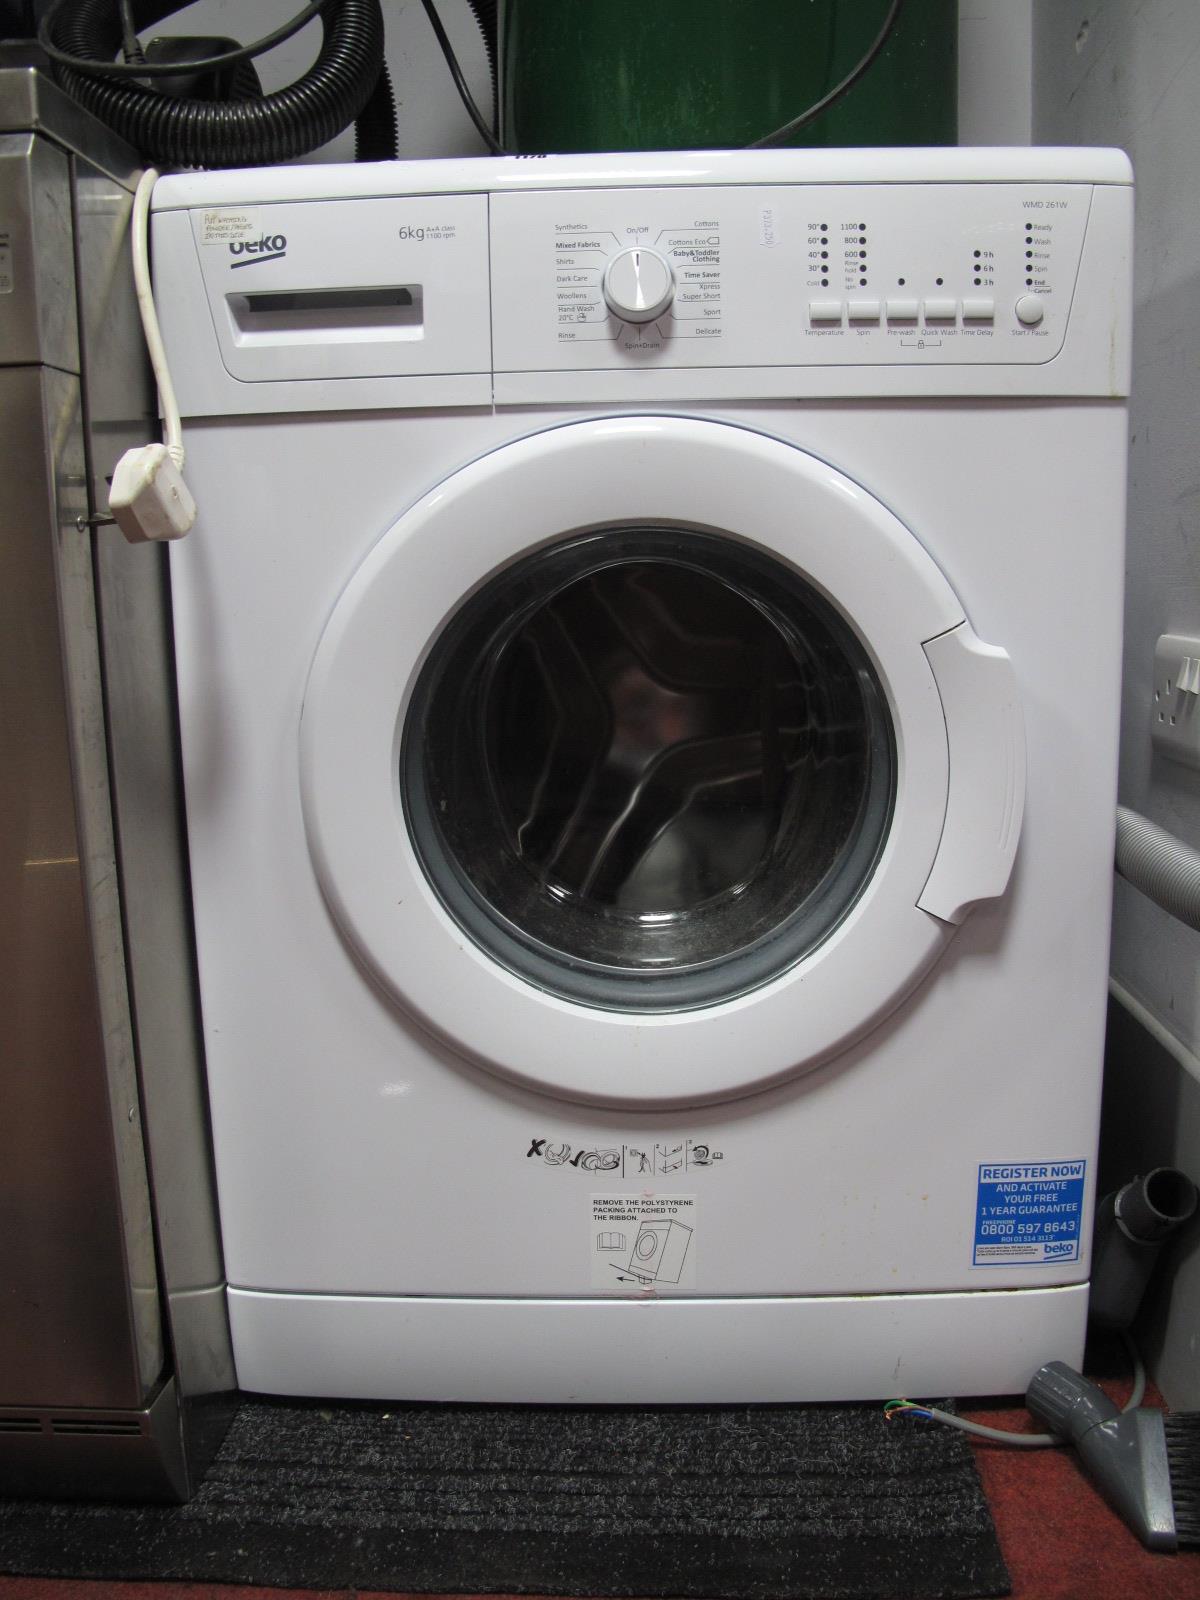 A Beko 6kg Washing Machine.